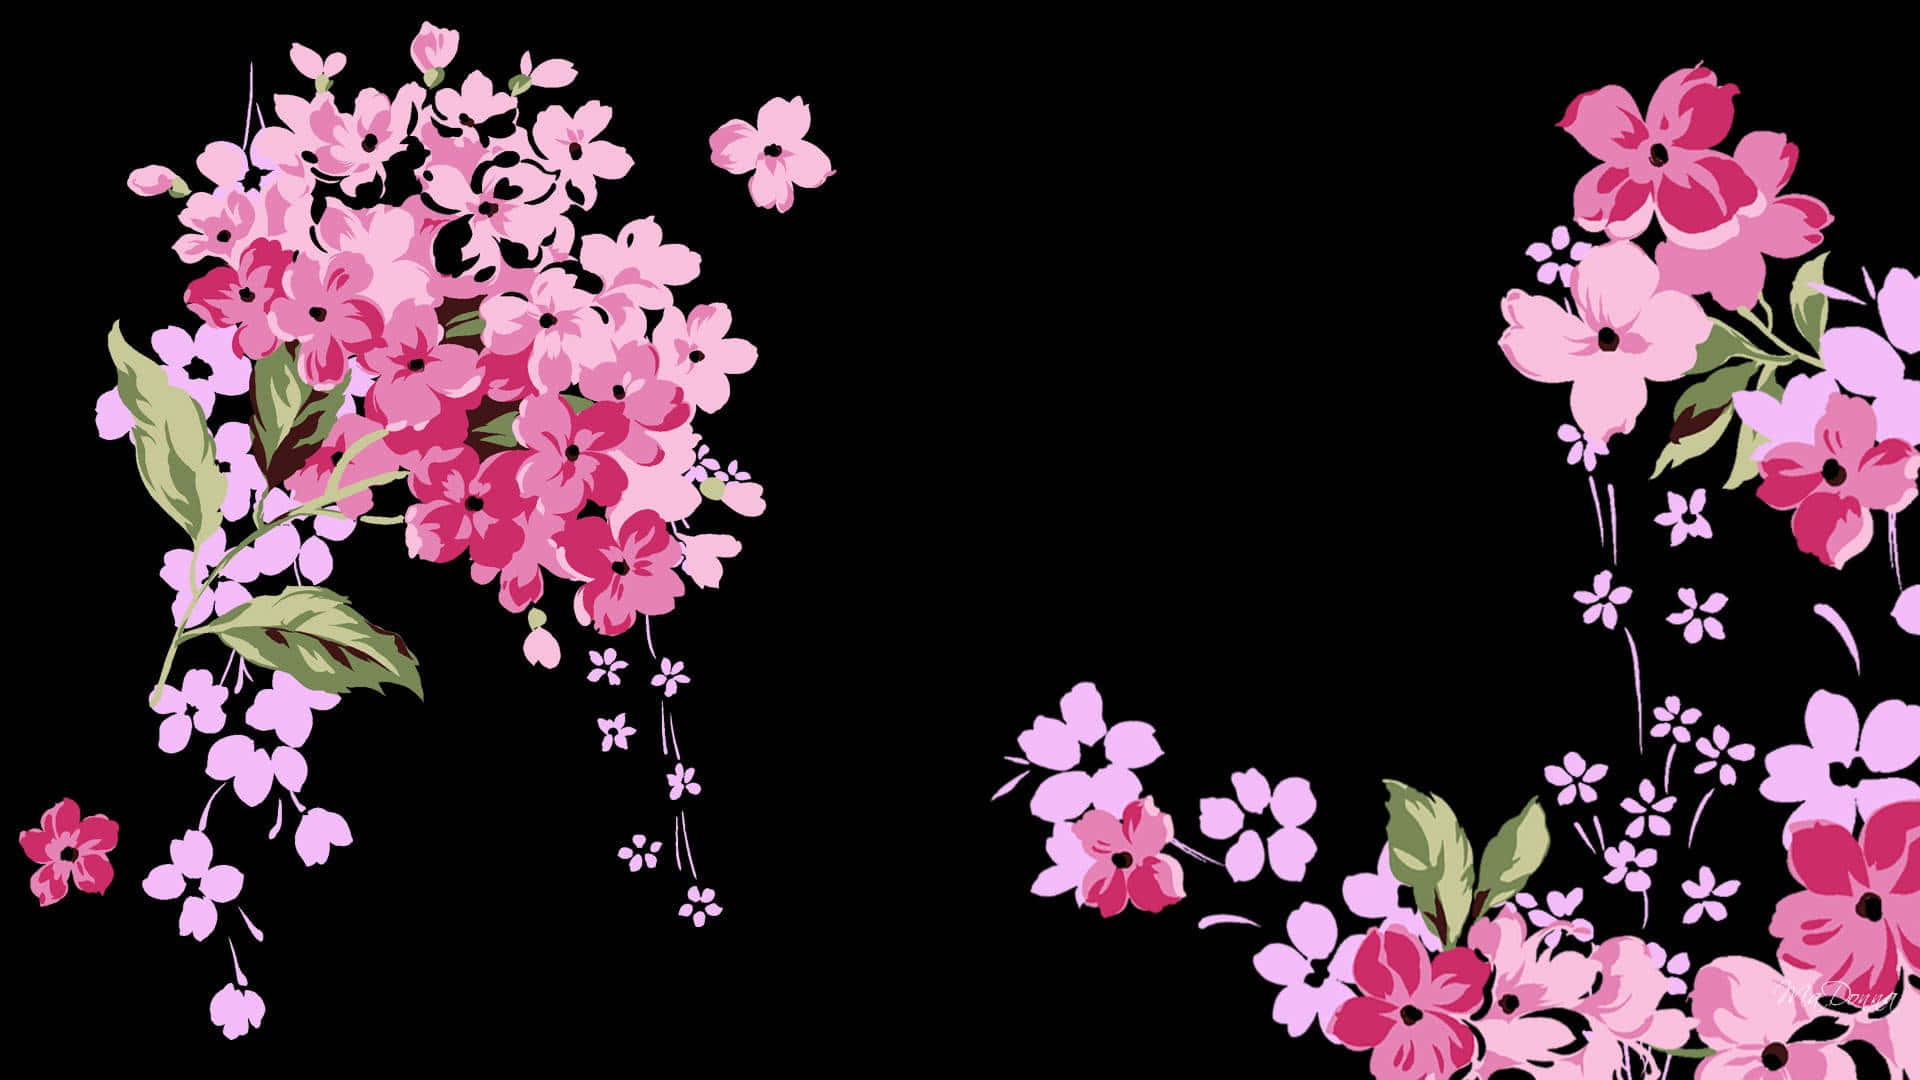 Aesthetic Black And Pink Flower Art Desktop Wallpaper